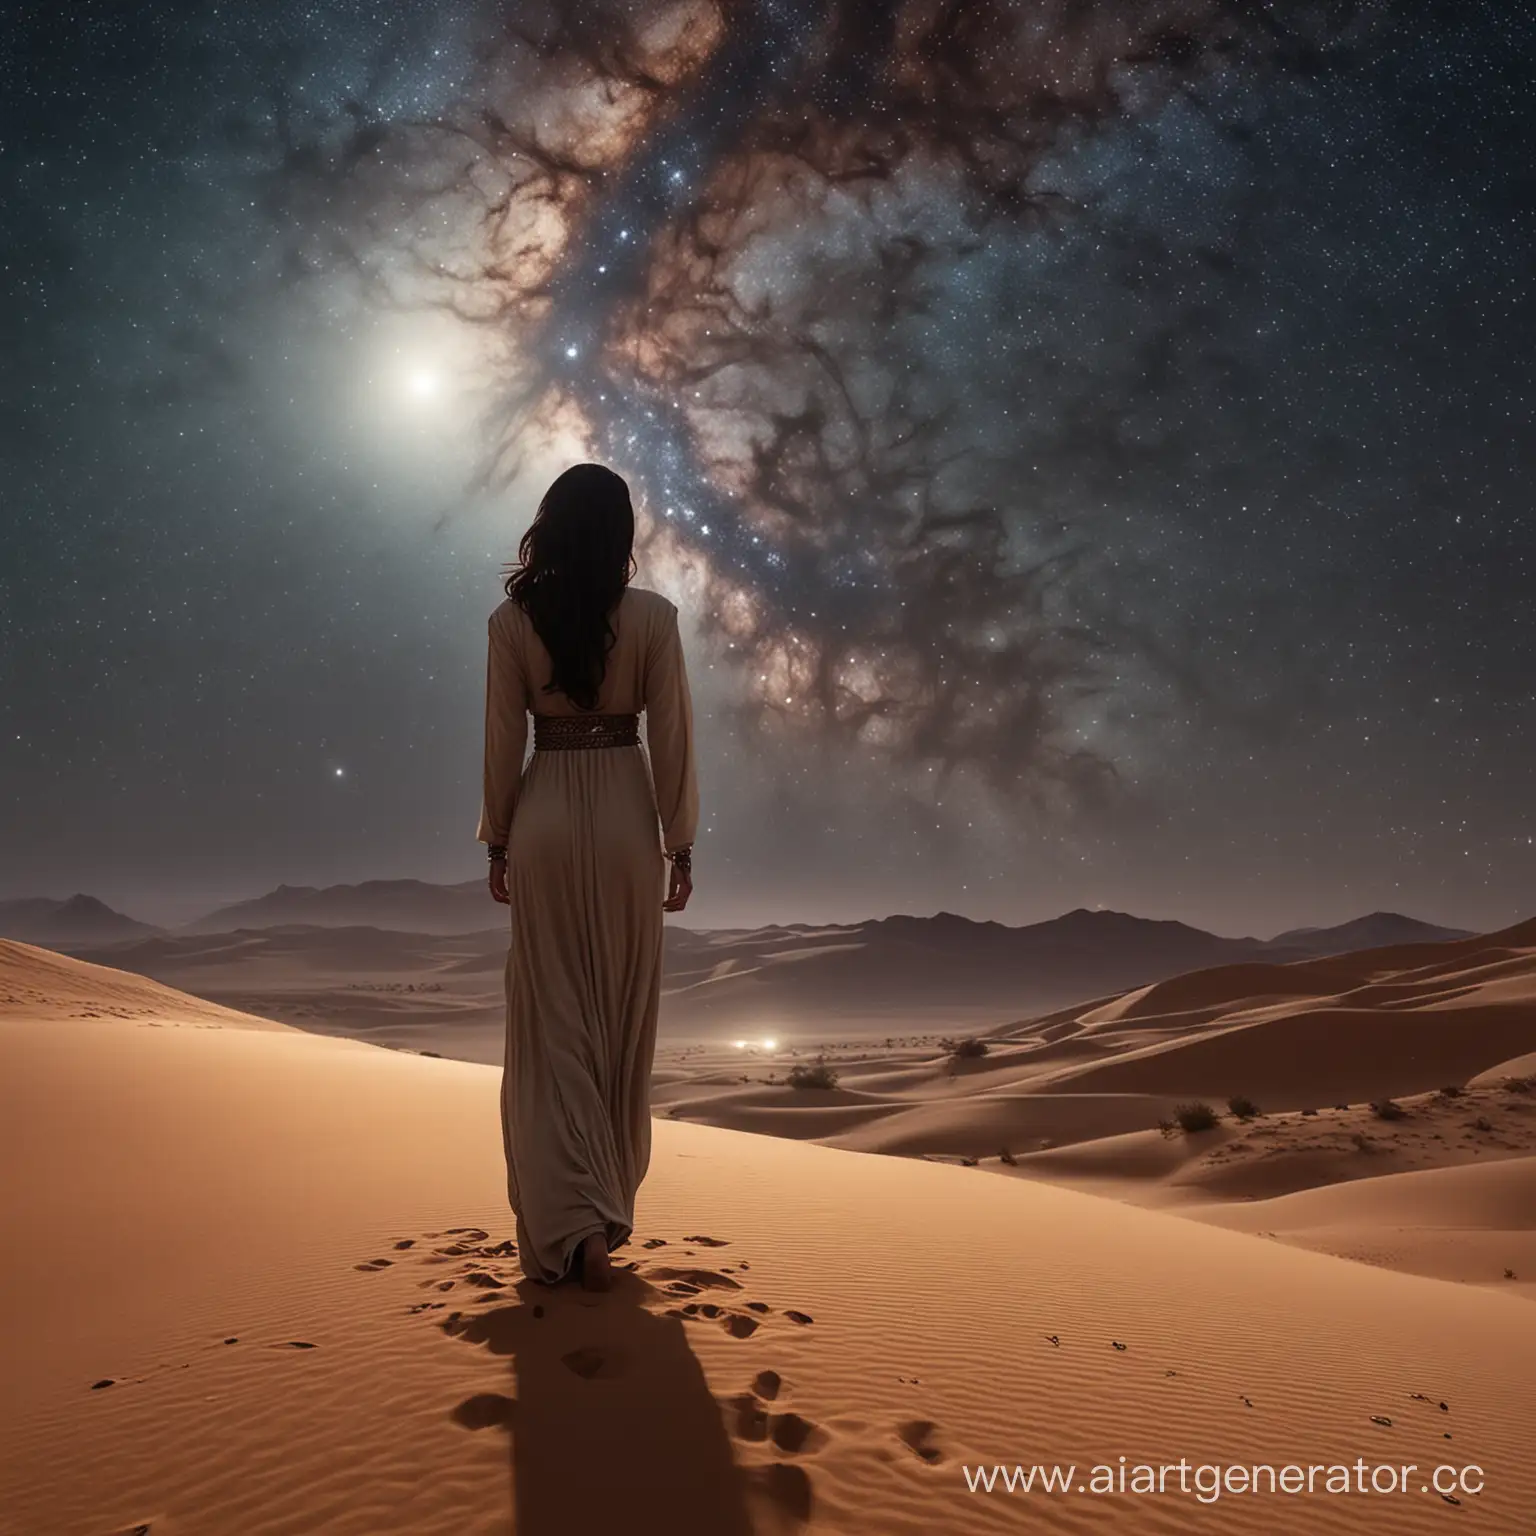 Arabian-Female-Gazing-at-Stars-on-a-Moonlit-Dune